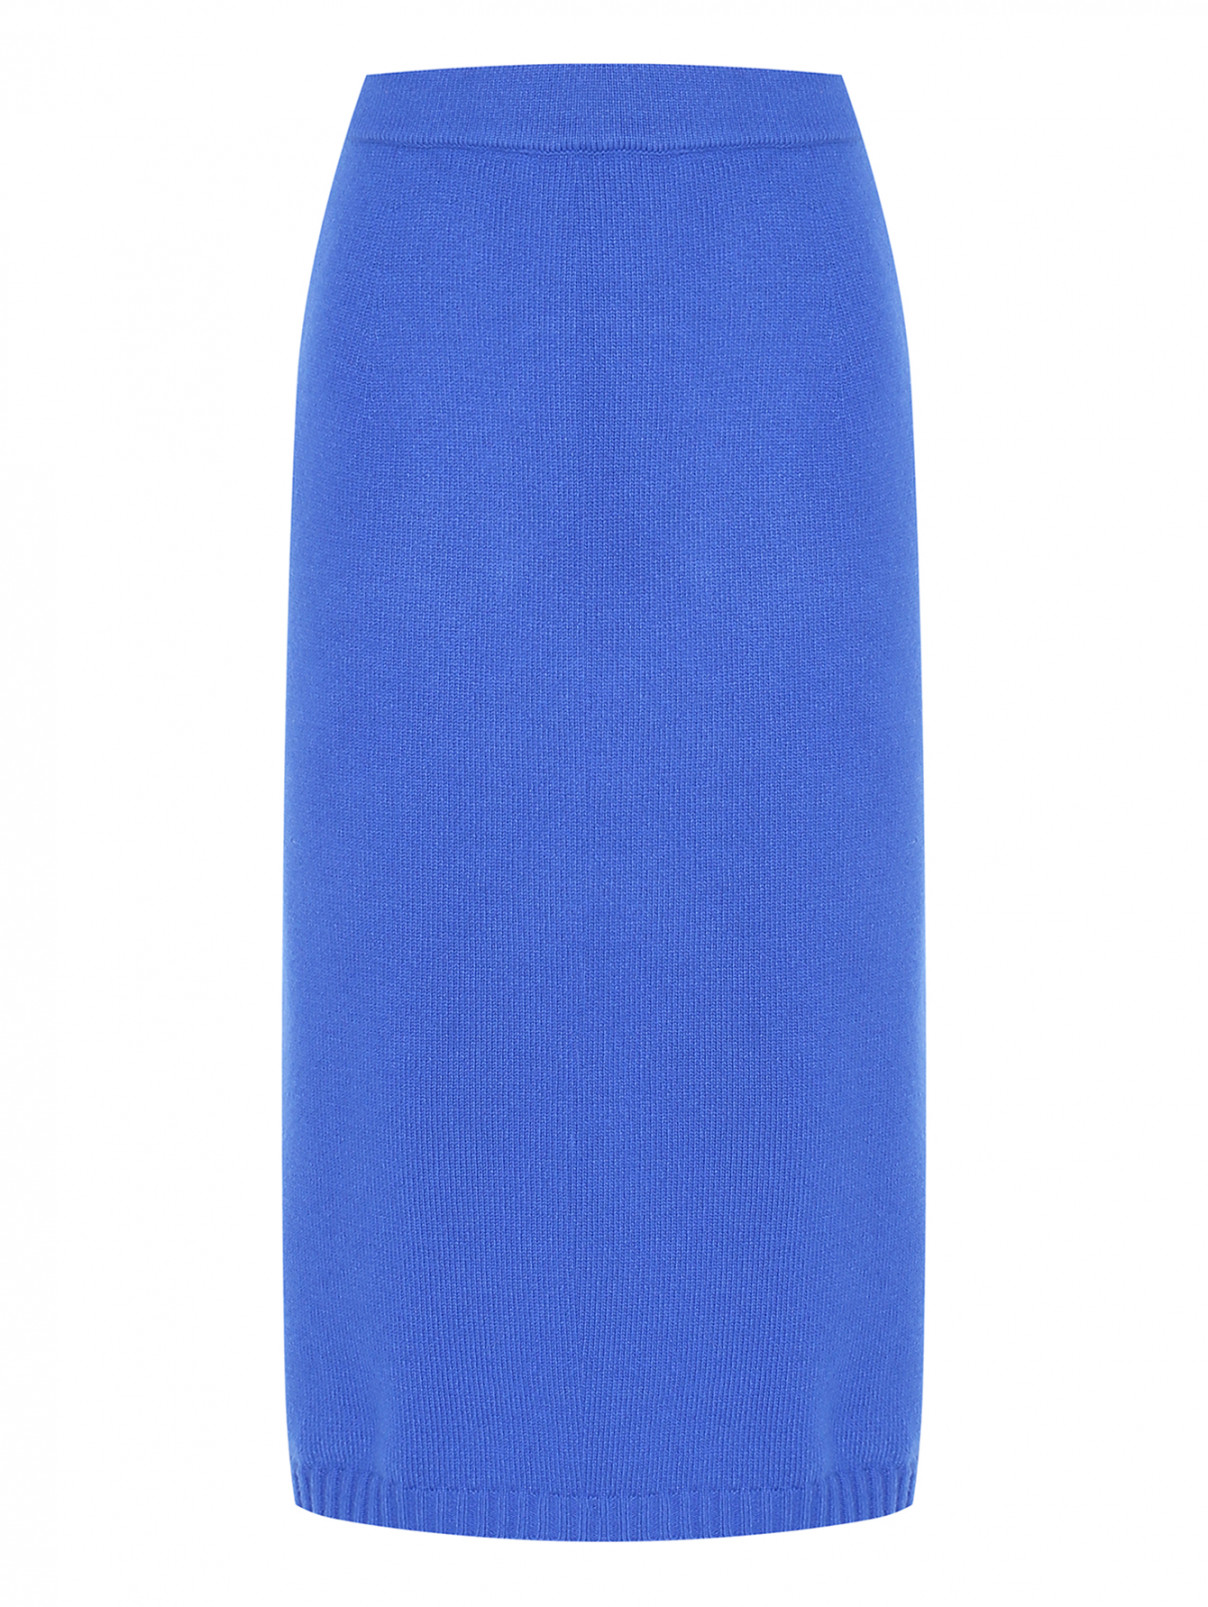 Трикотажная юбка на резинке Weekend Max Mara  –  Общий вид  – Цвет:  Синий